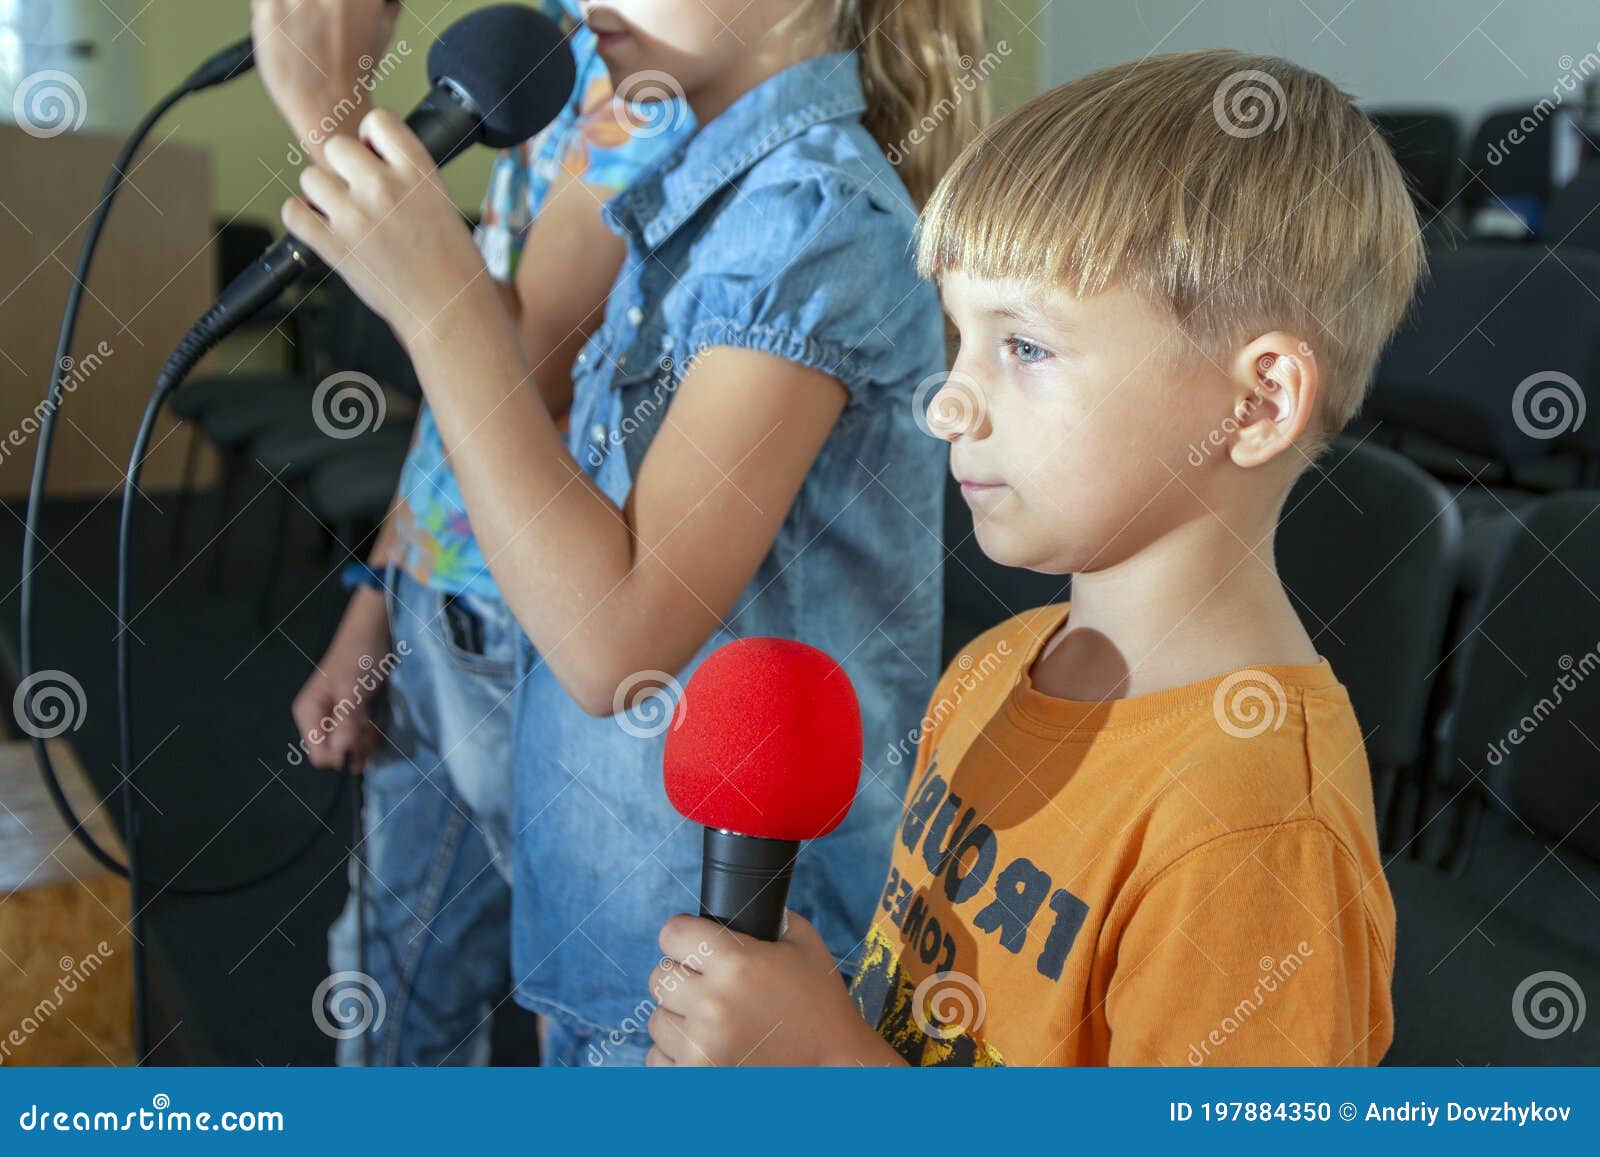 children participate with a microphone, recite poems, recitation